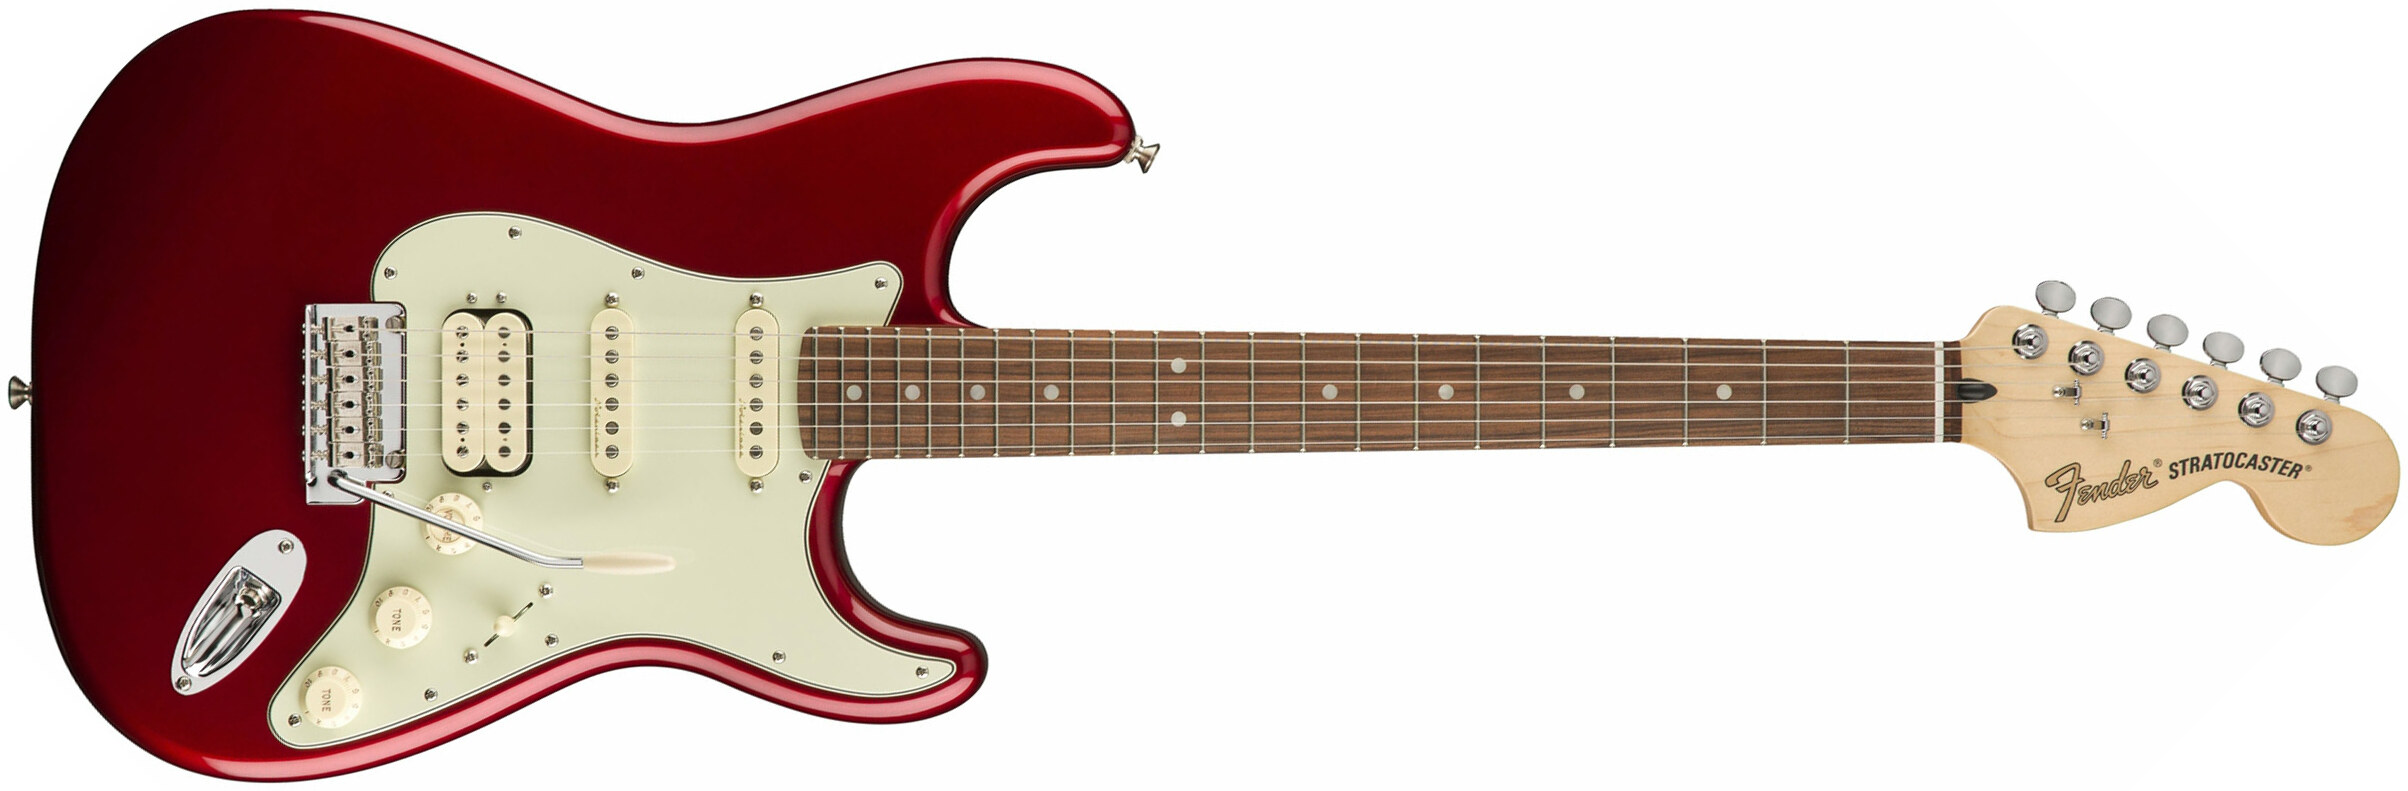 Fender Strat Deluxe Hss Mex Pf 2017 - Candy Apple Red - Guitarra eléctrica con forma de str. - Main picture